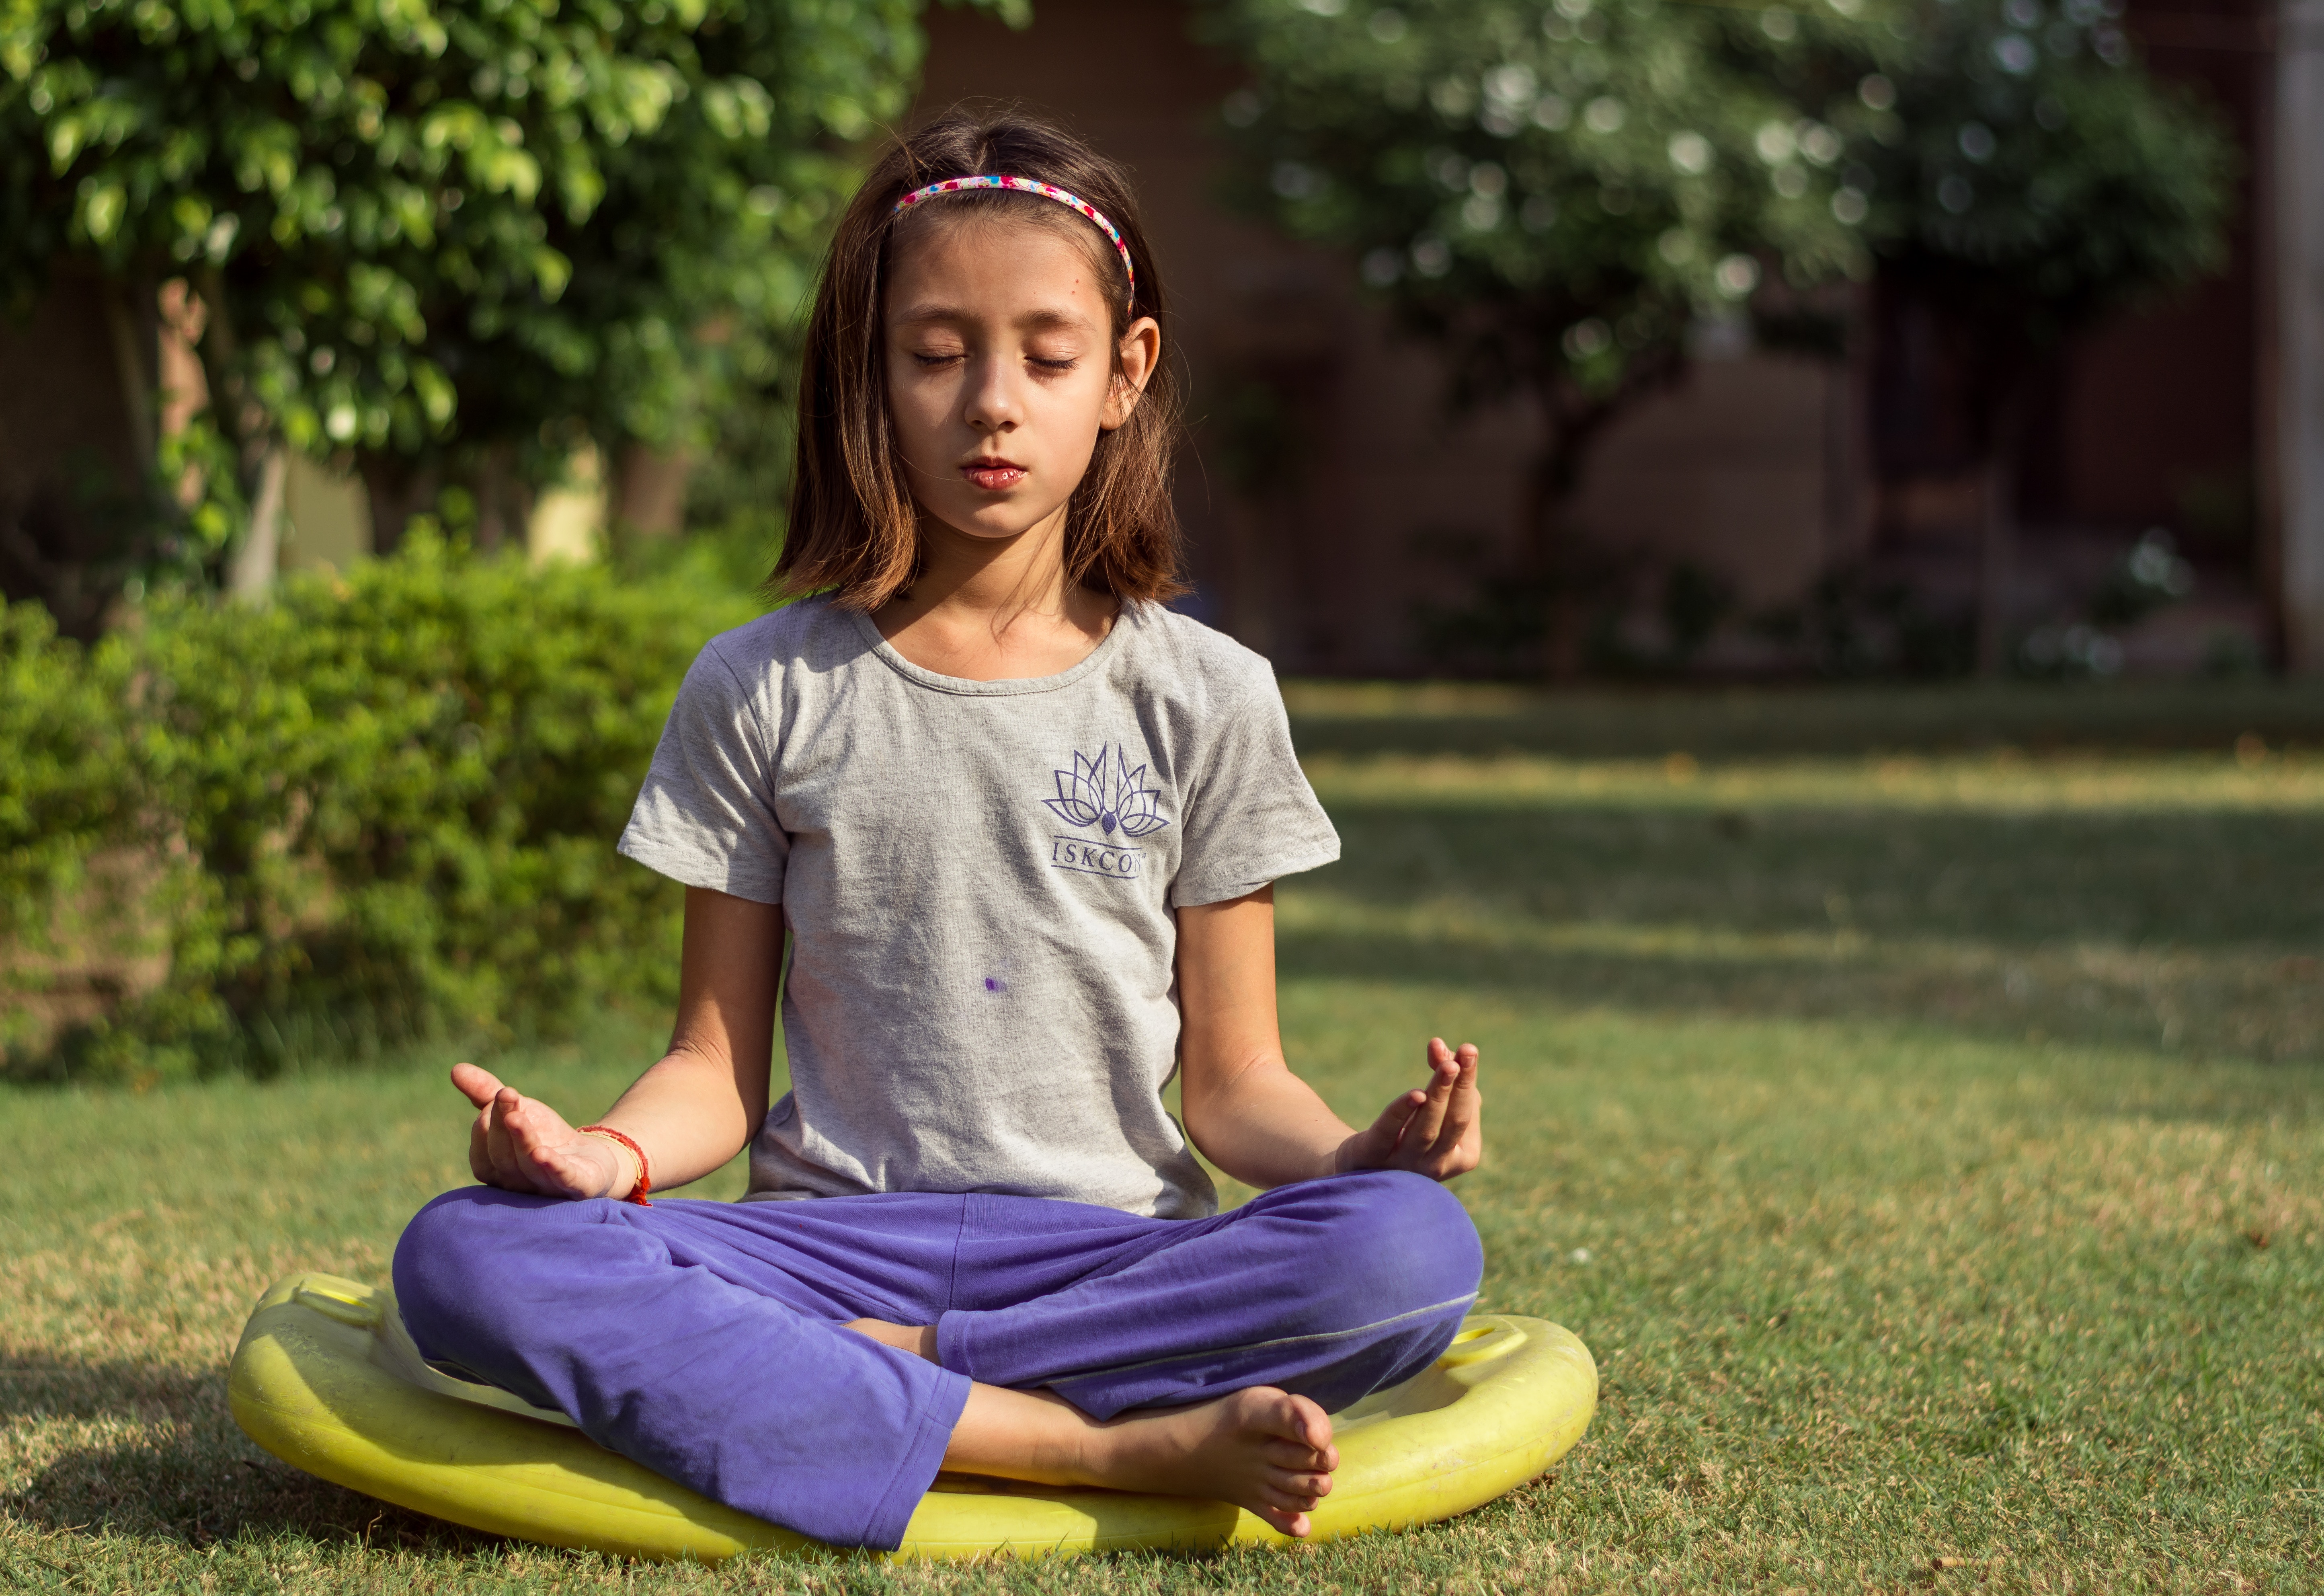 Teaching kids mindfulness - young girl meditating